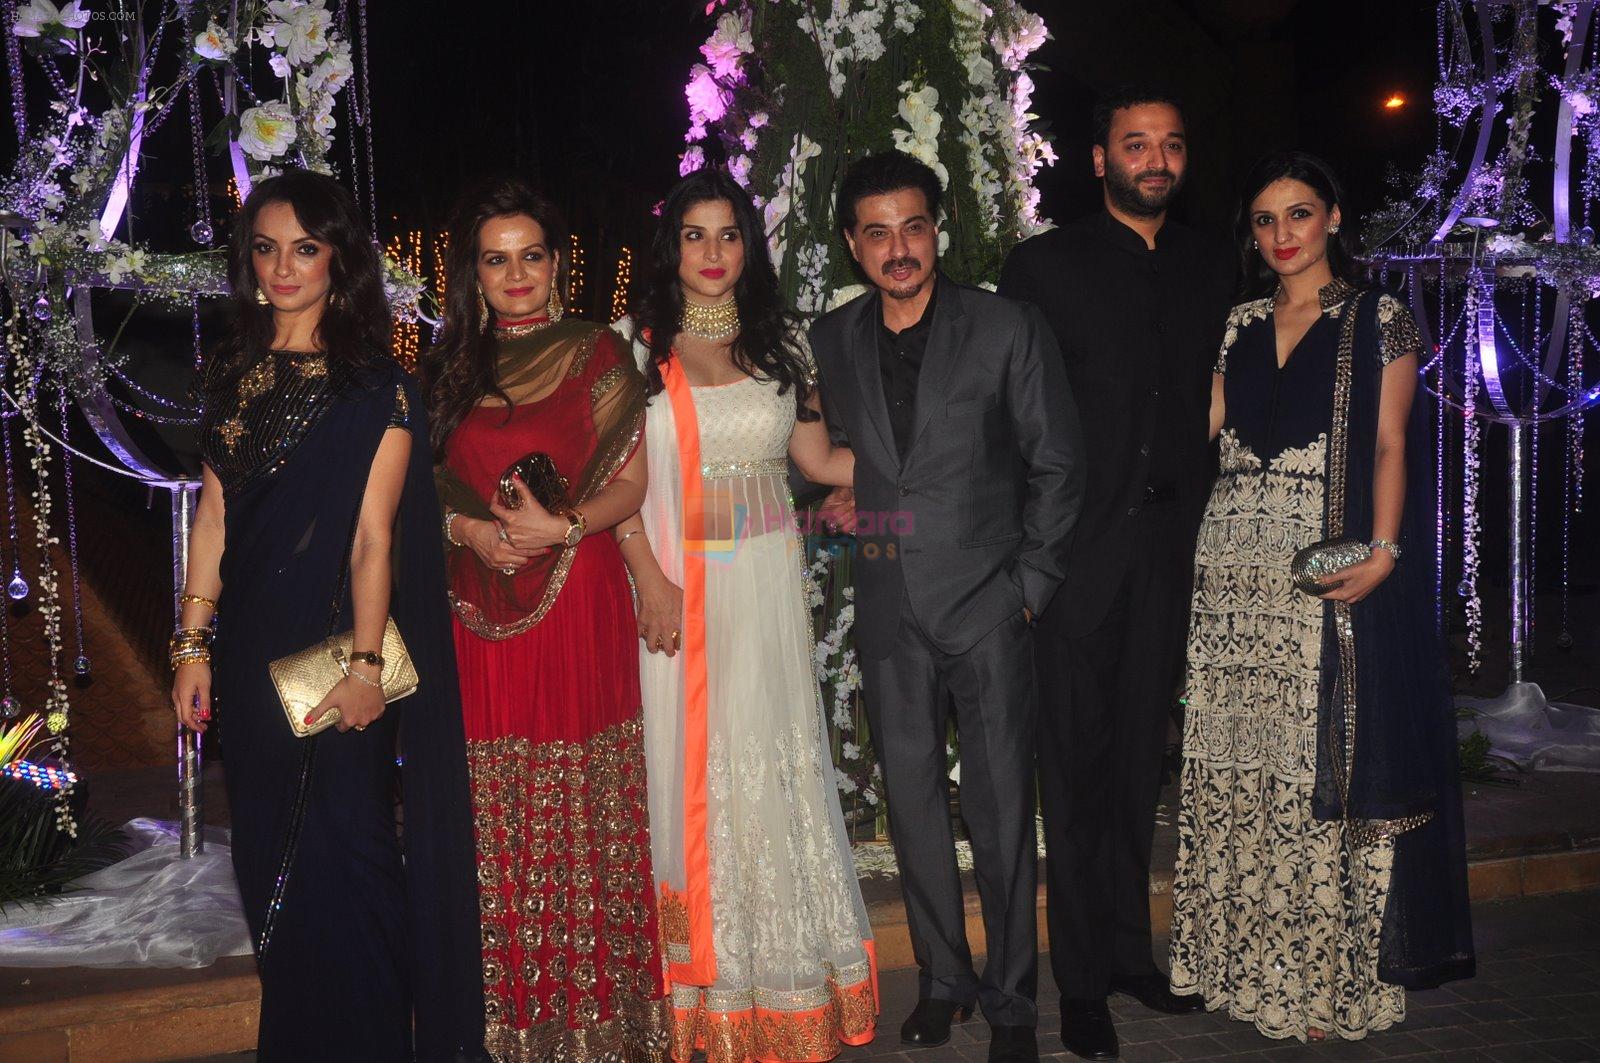 Sanjay Kapoor, Maheep Kapoor, Anu Dewan at Sangeet ceremony of Riddhi Malhotra and Tejas Talwalkar in J W Marriott, Mumbai on 13th Dec 2014